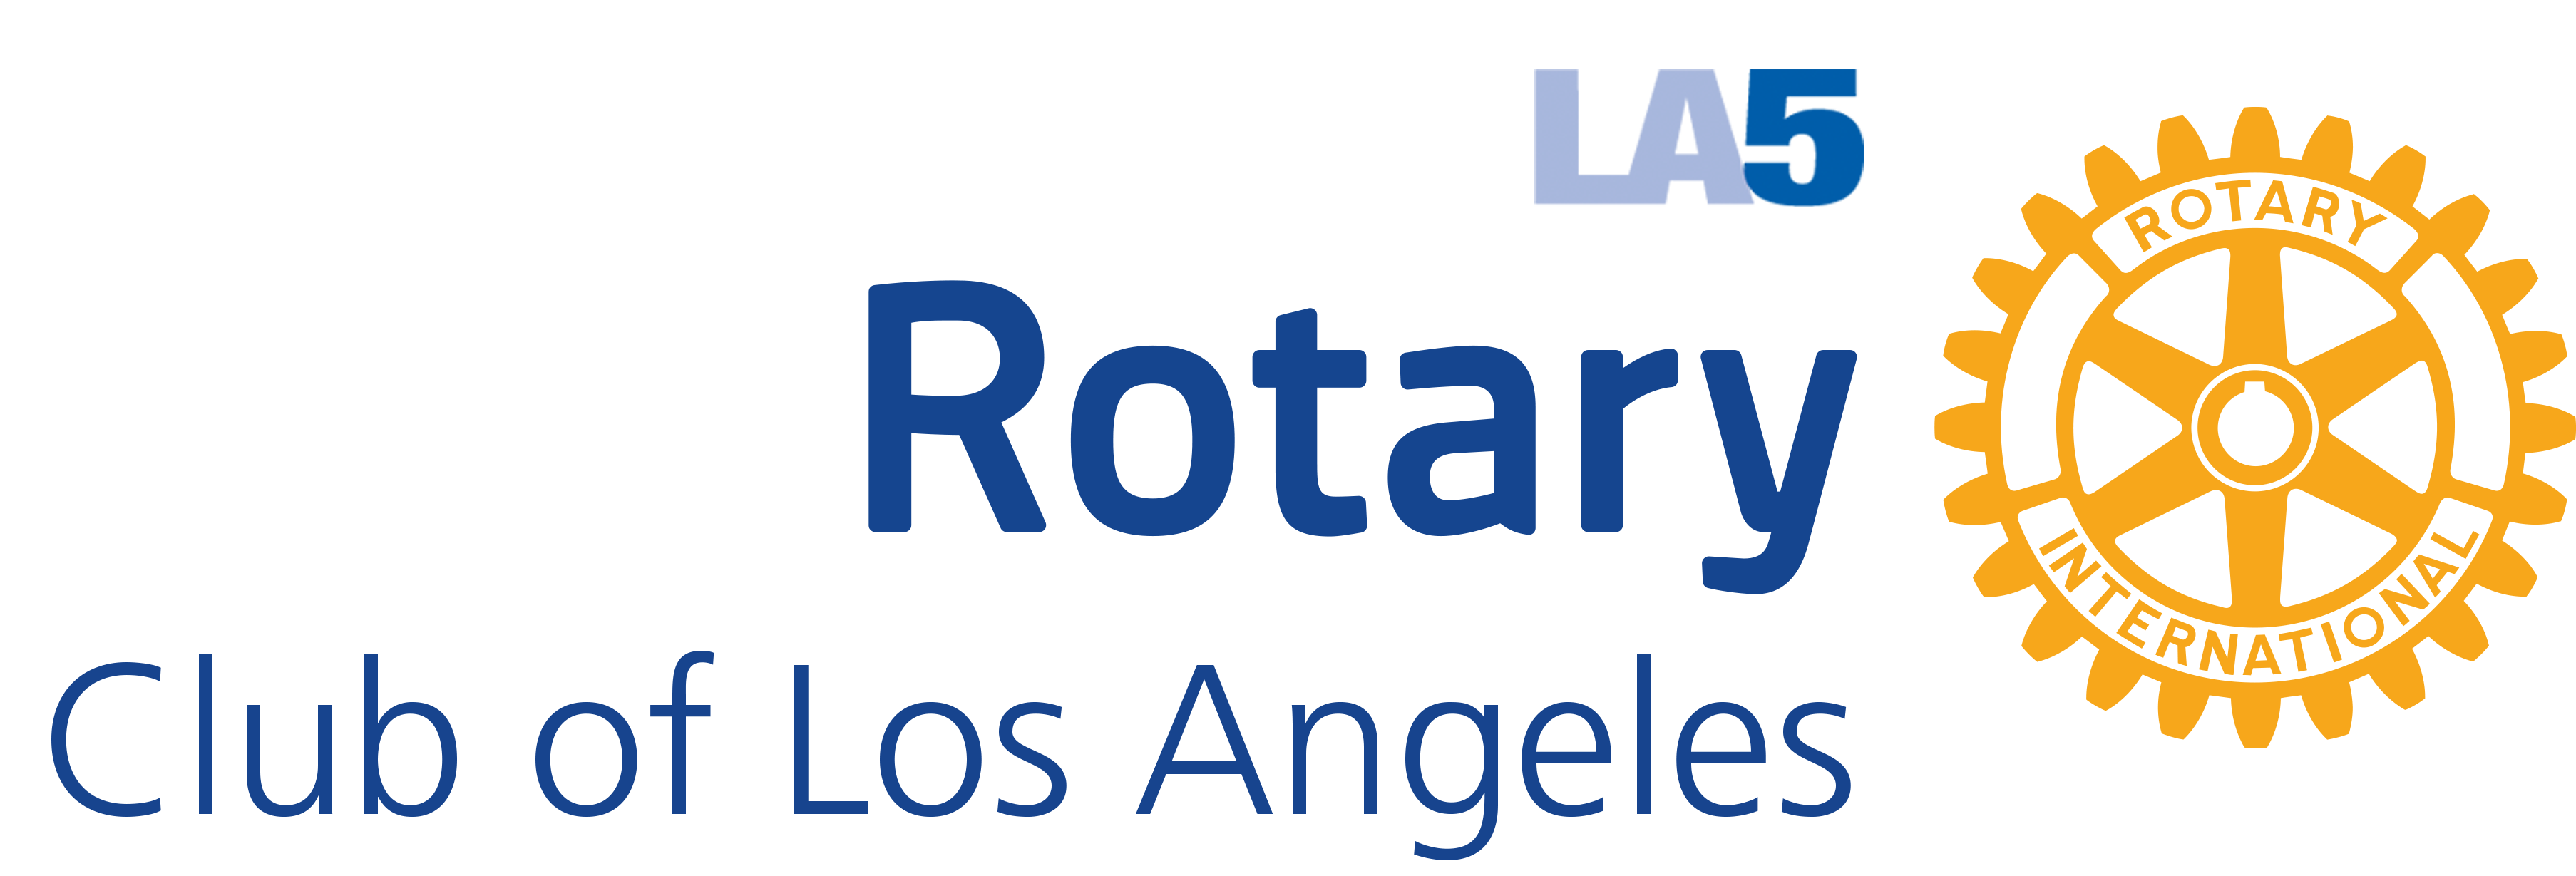 Rotary Club of Los Angeles (LA5) Foundation logo